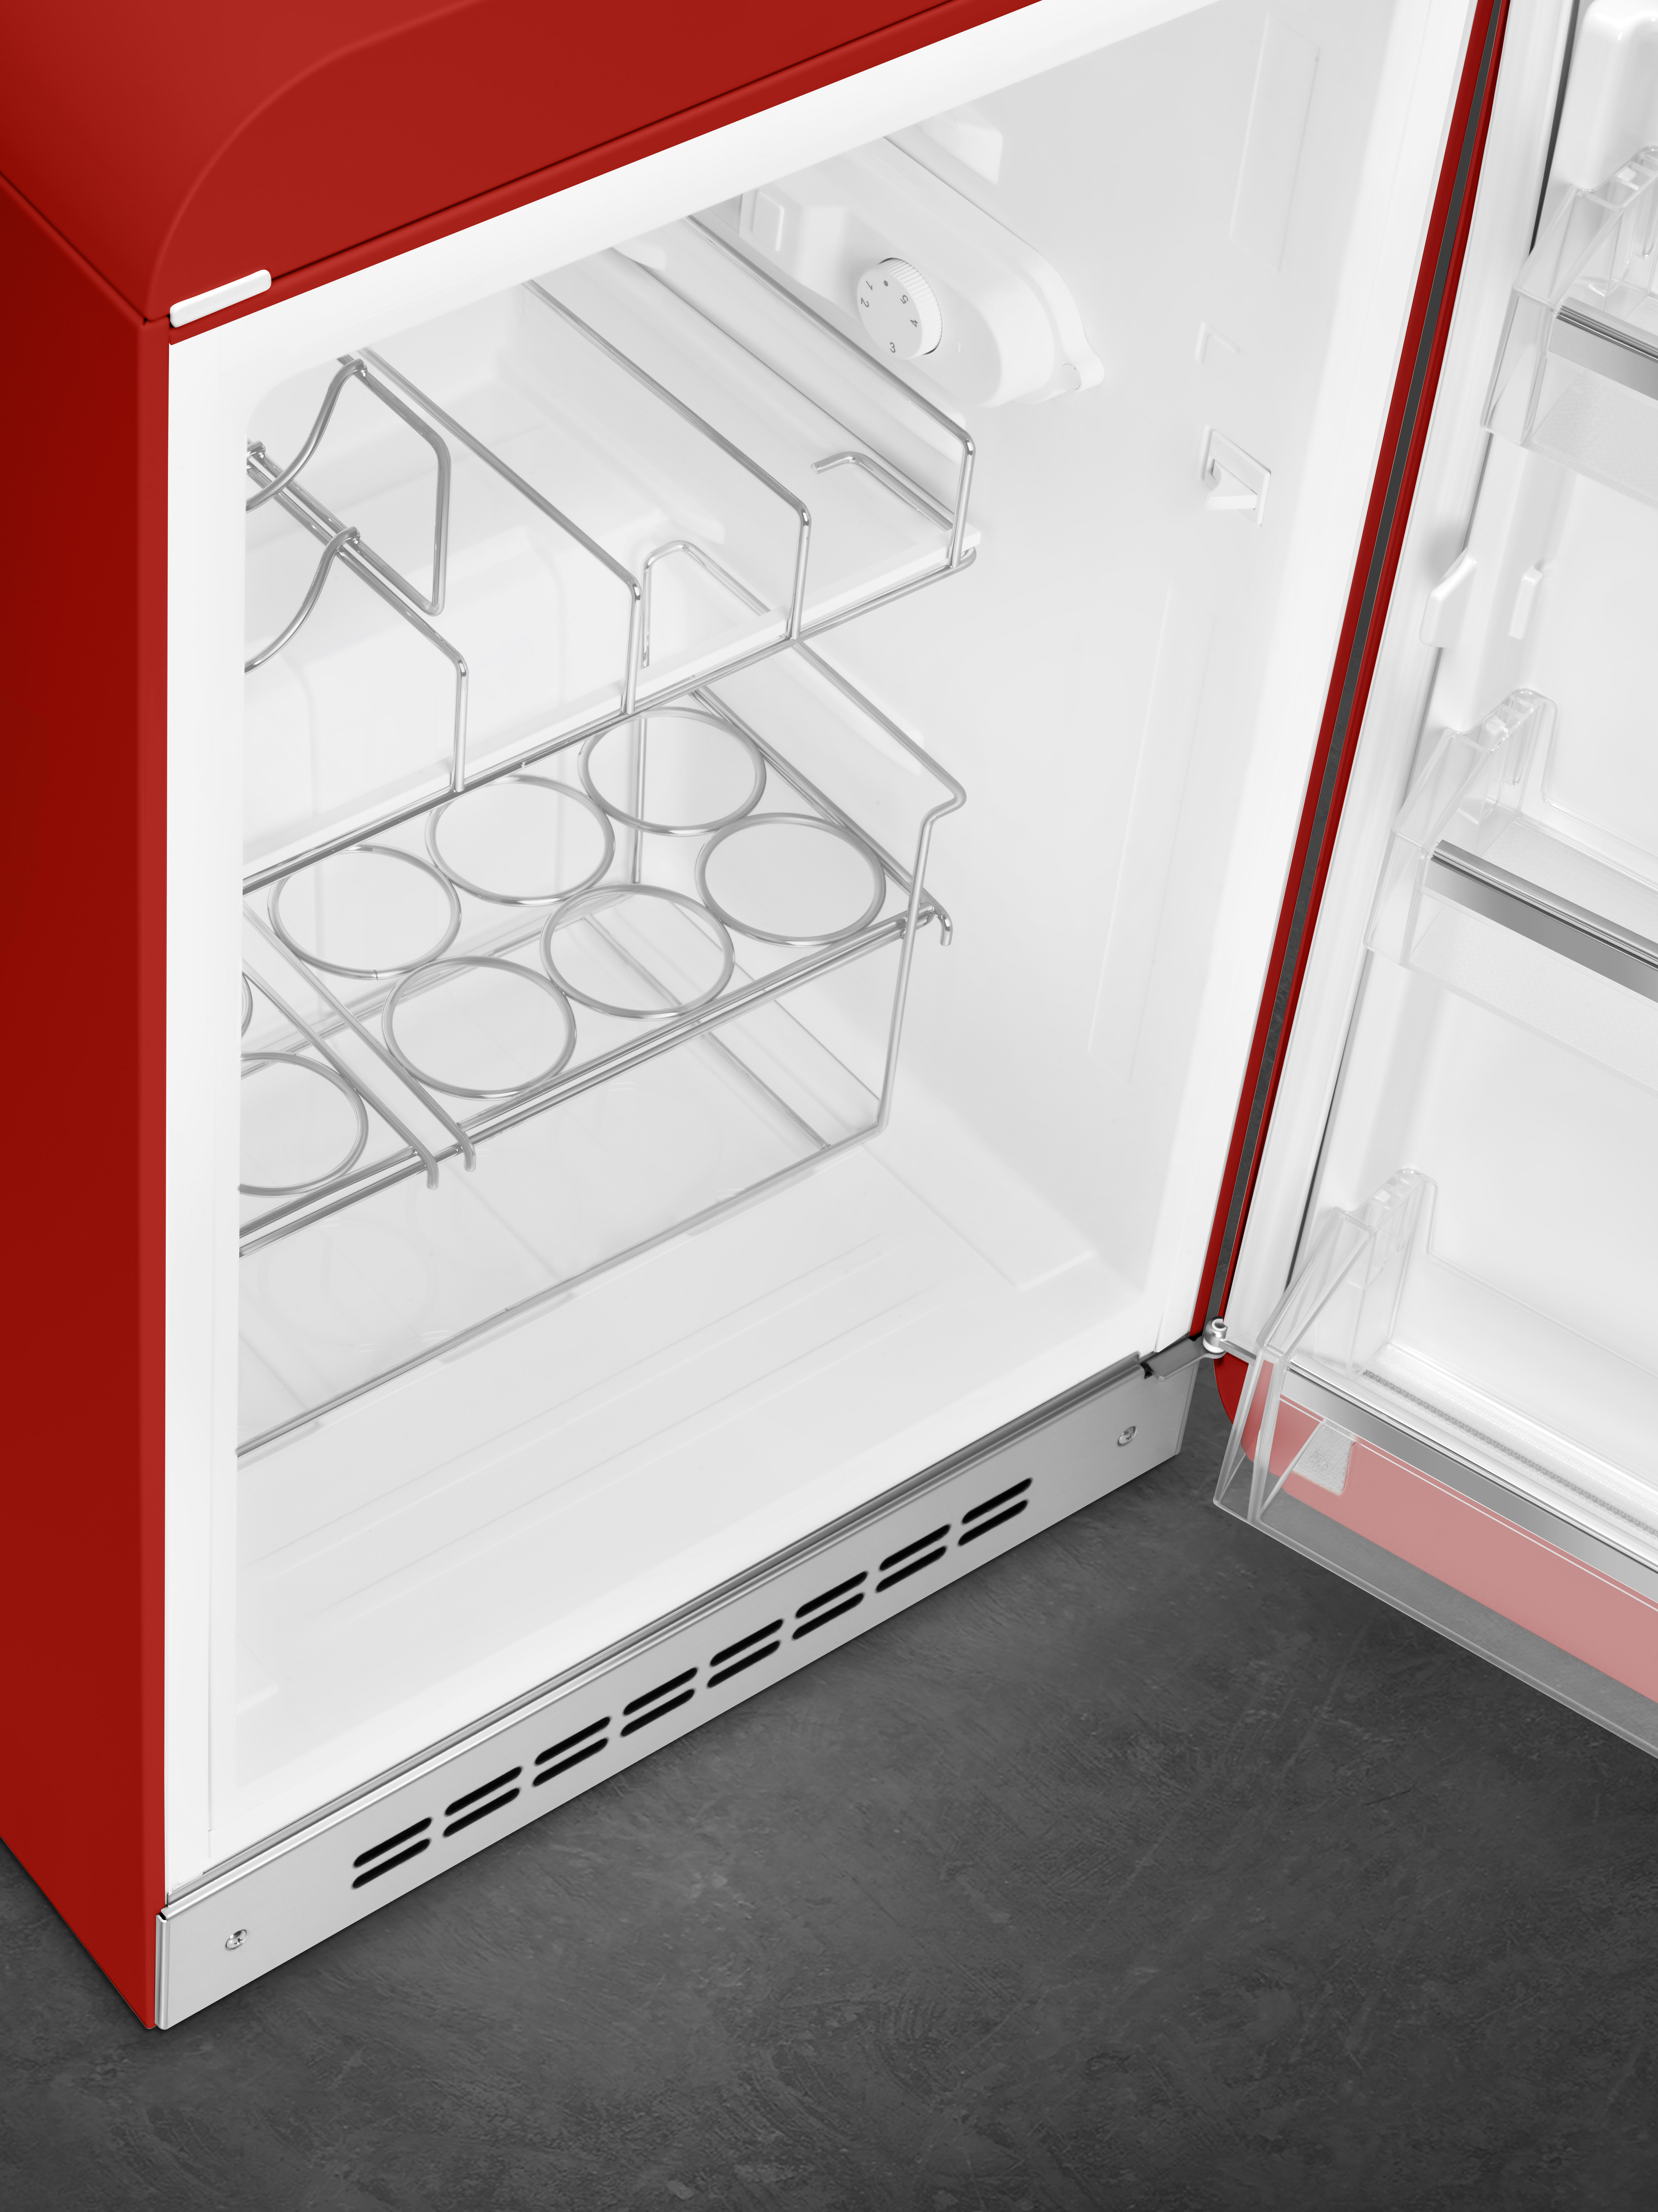 50's Style, Stand-Kühlschrank, Happy Homebar, 1-türig, 54 cm, Rechtsanschlag, Rot